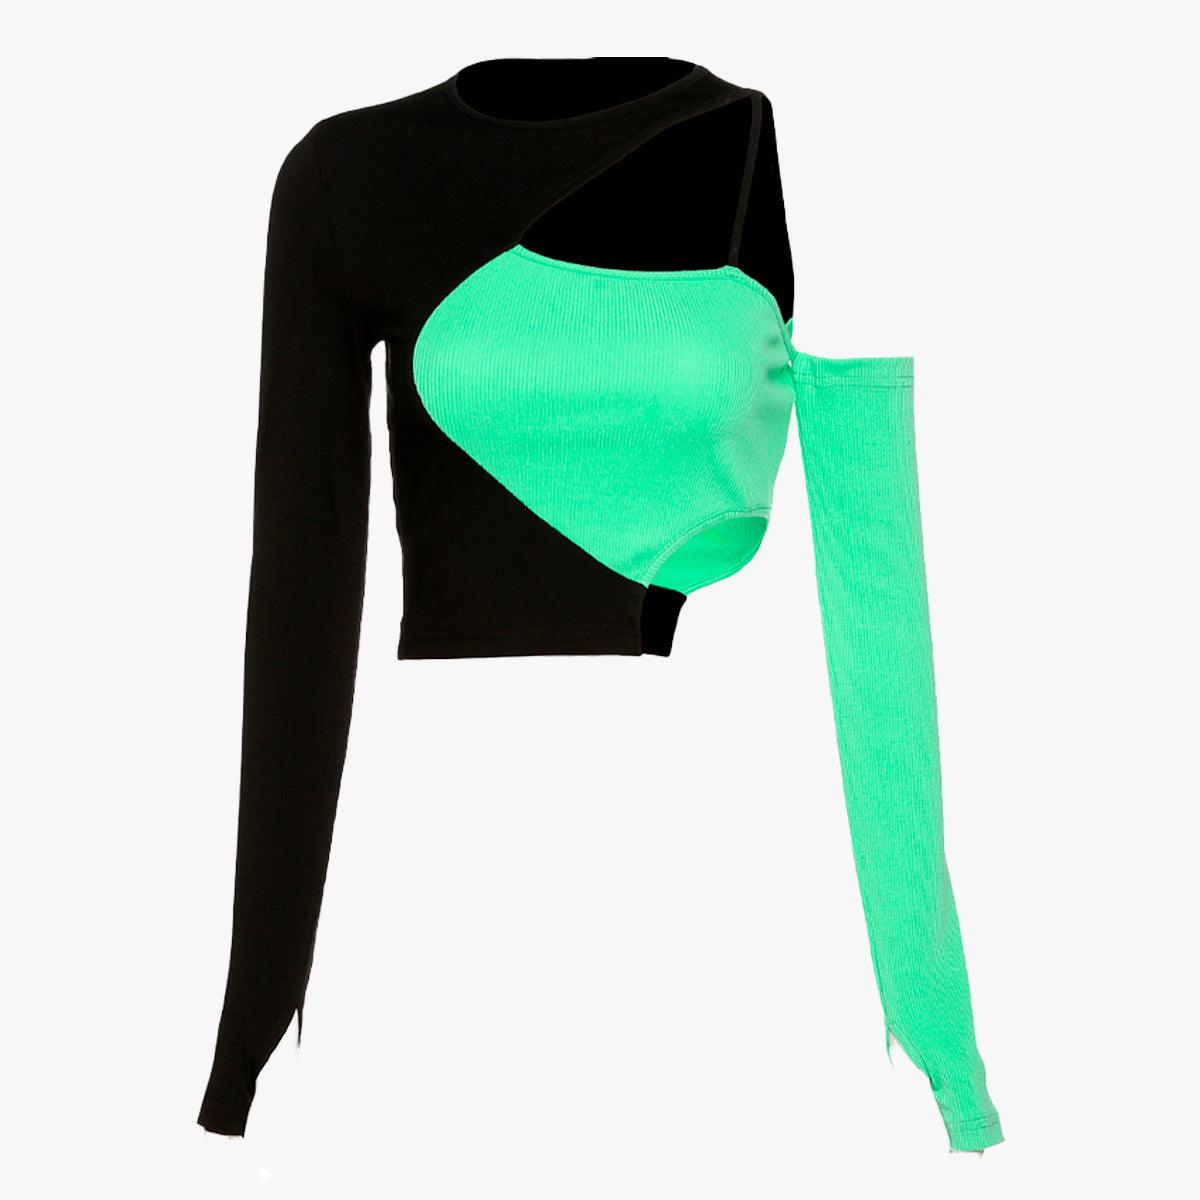 One Shoulder Asymmetric Green Top - Aesthetic Clothes Shop